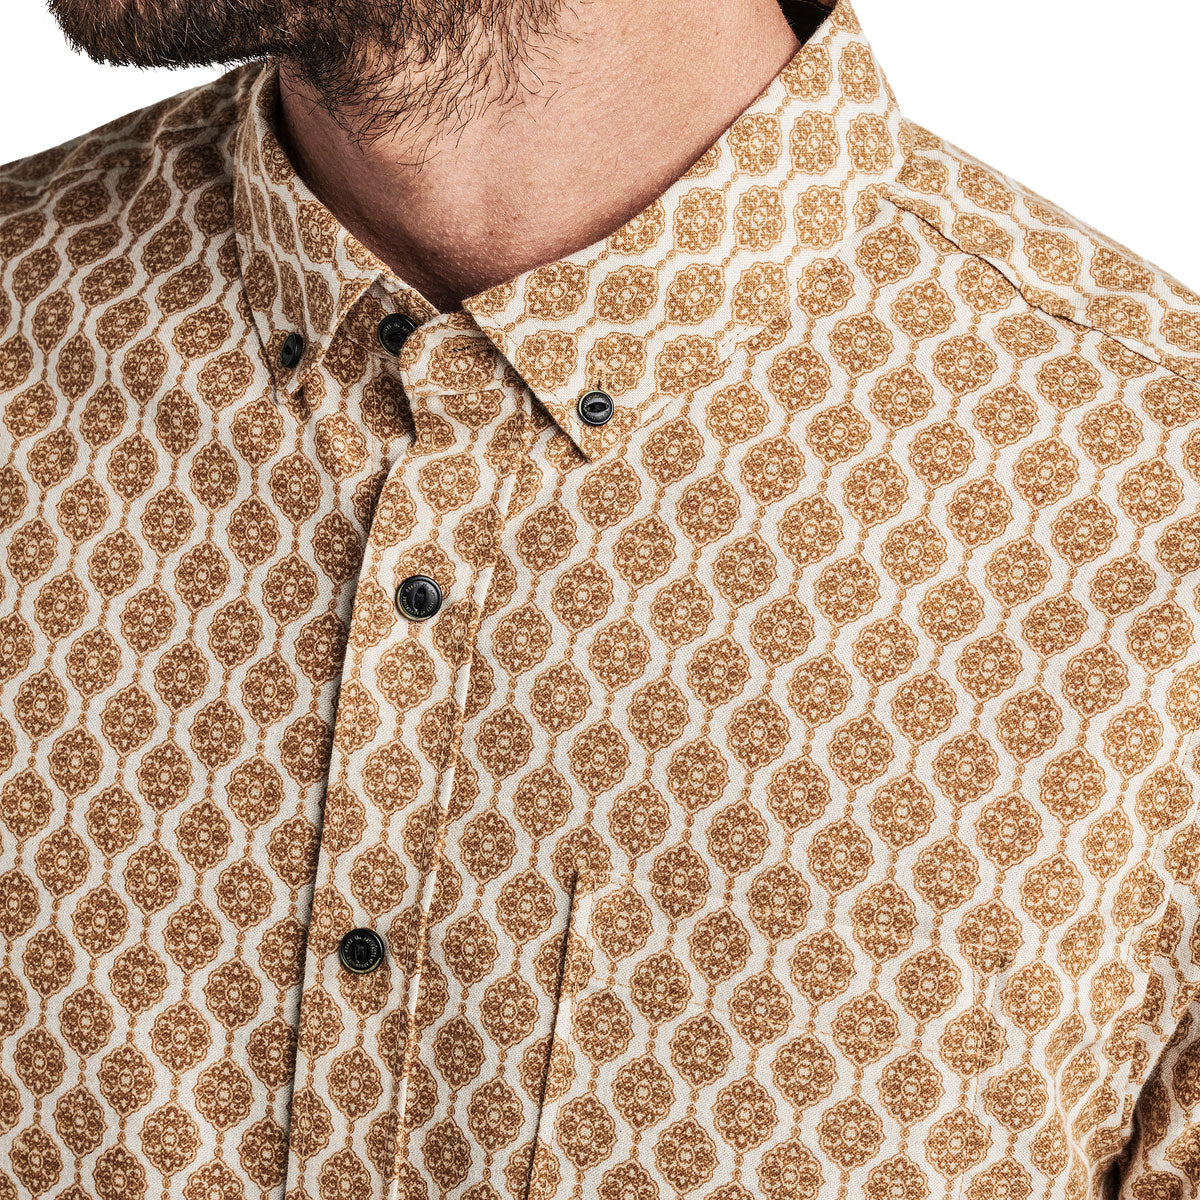 Roark Scholar Oxford Woven Shirt - Pignoli image 3